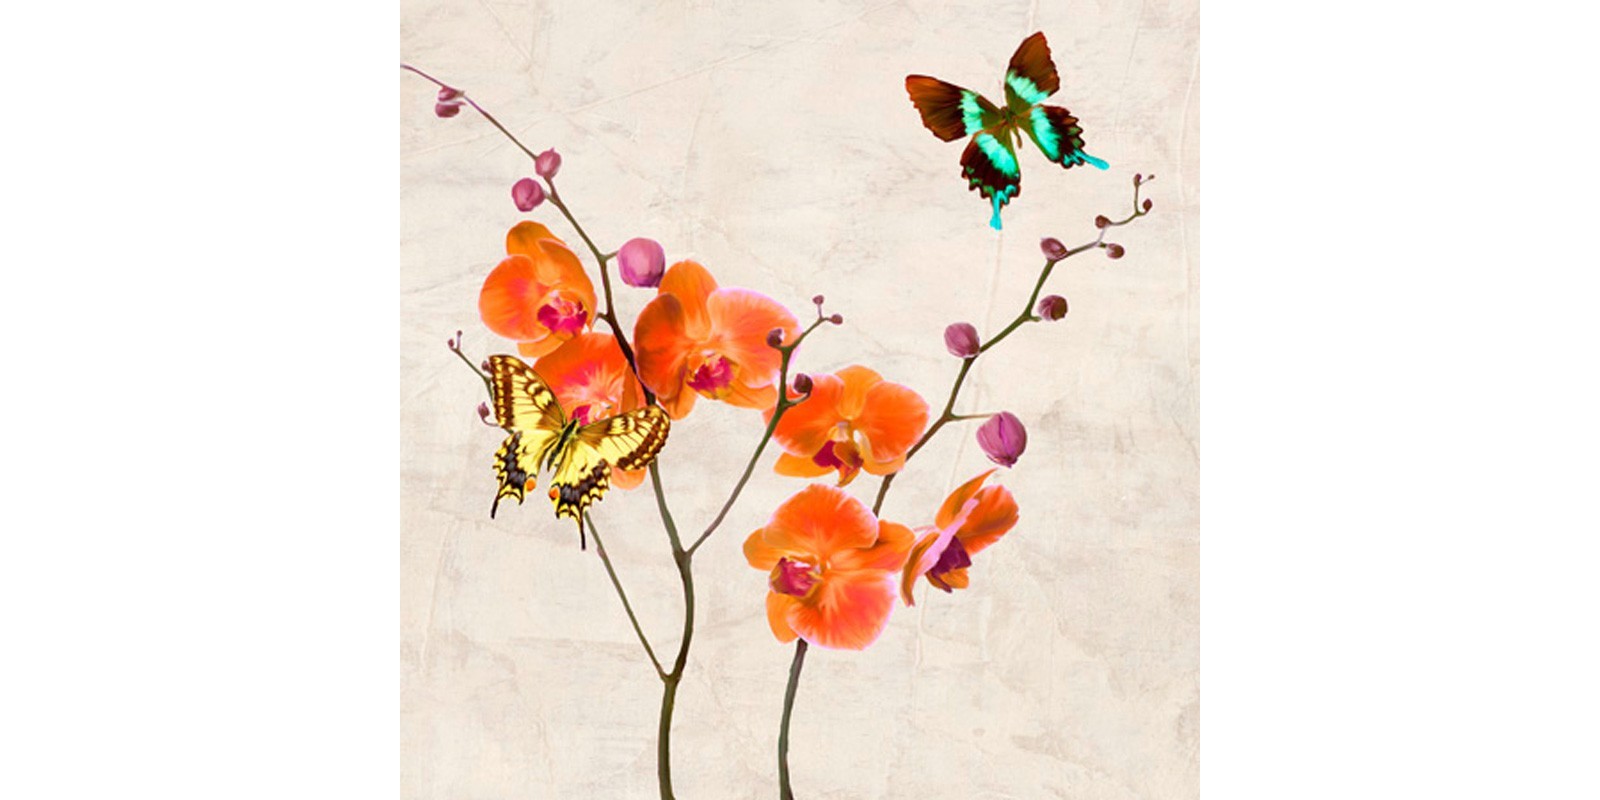 Teo Rizzardi - Orchids & Butterflies I